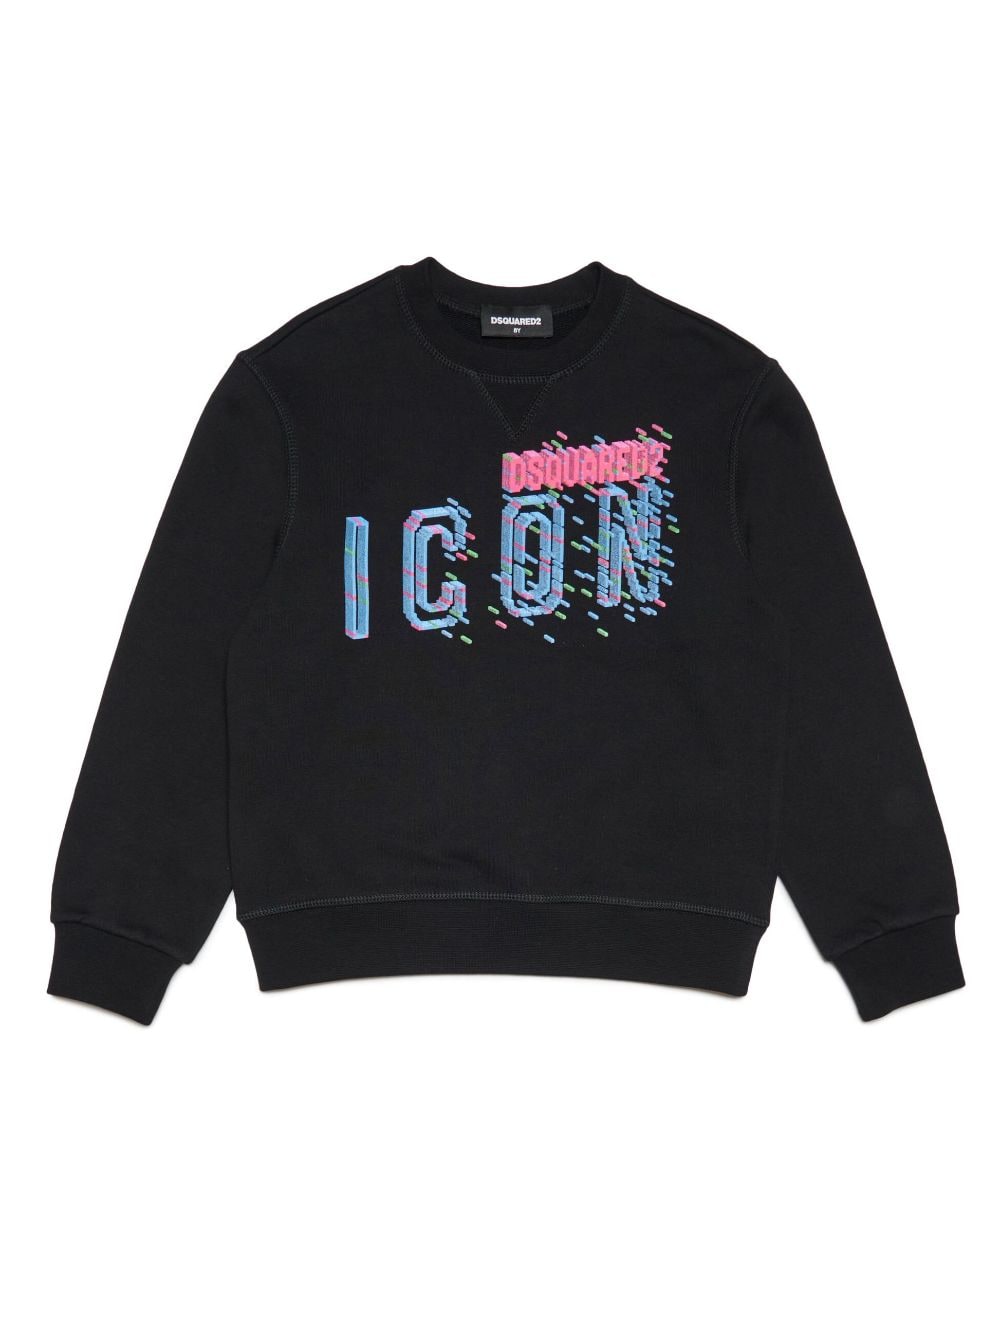 Black sweatshirt for boys with ICON print